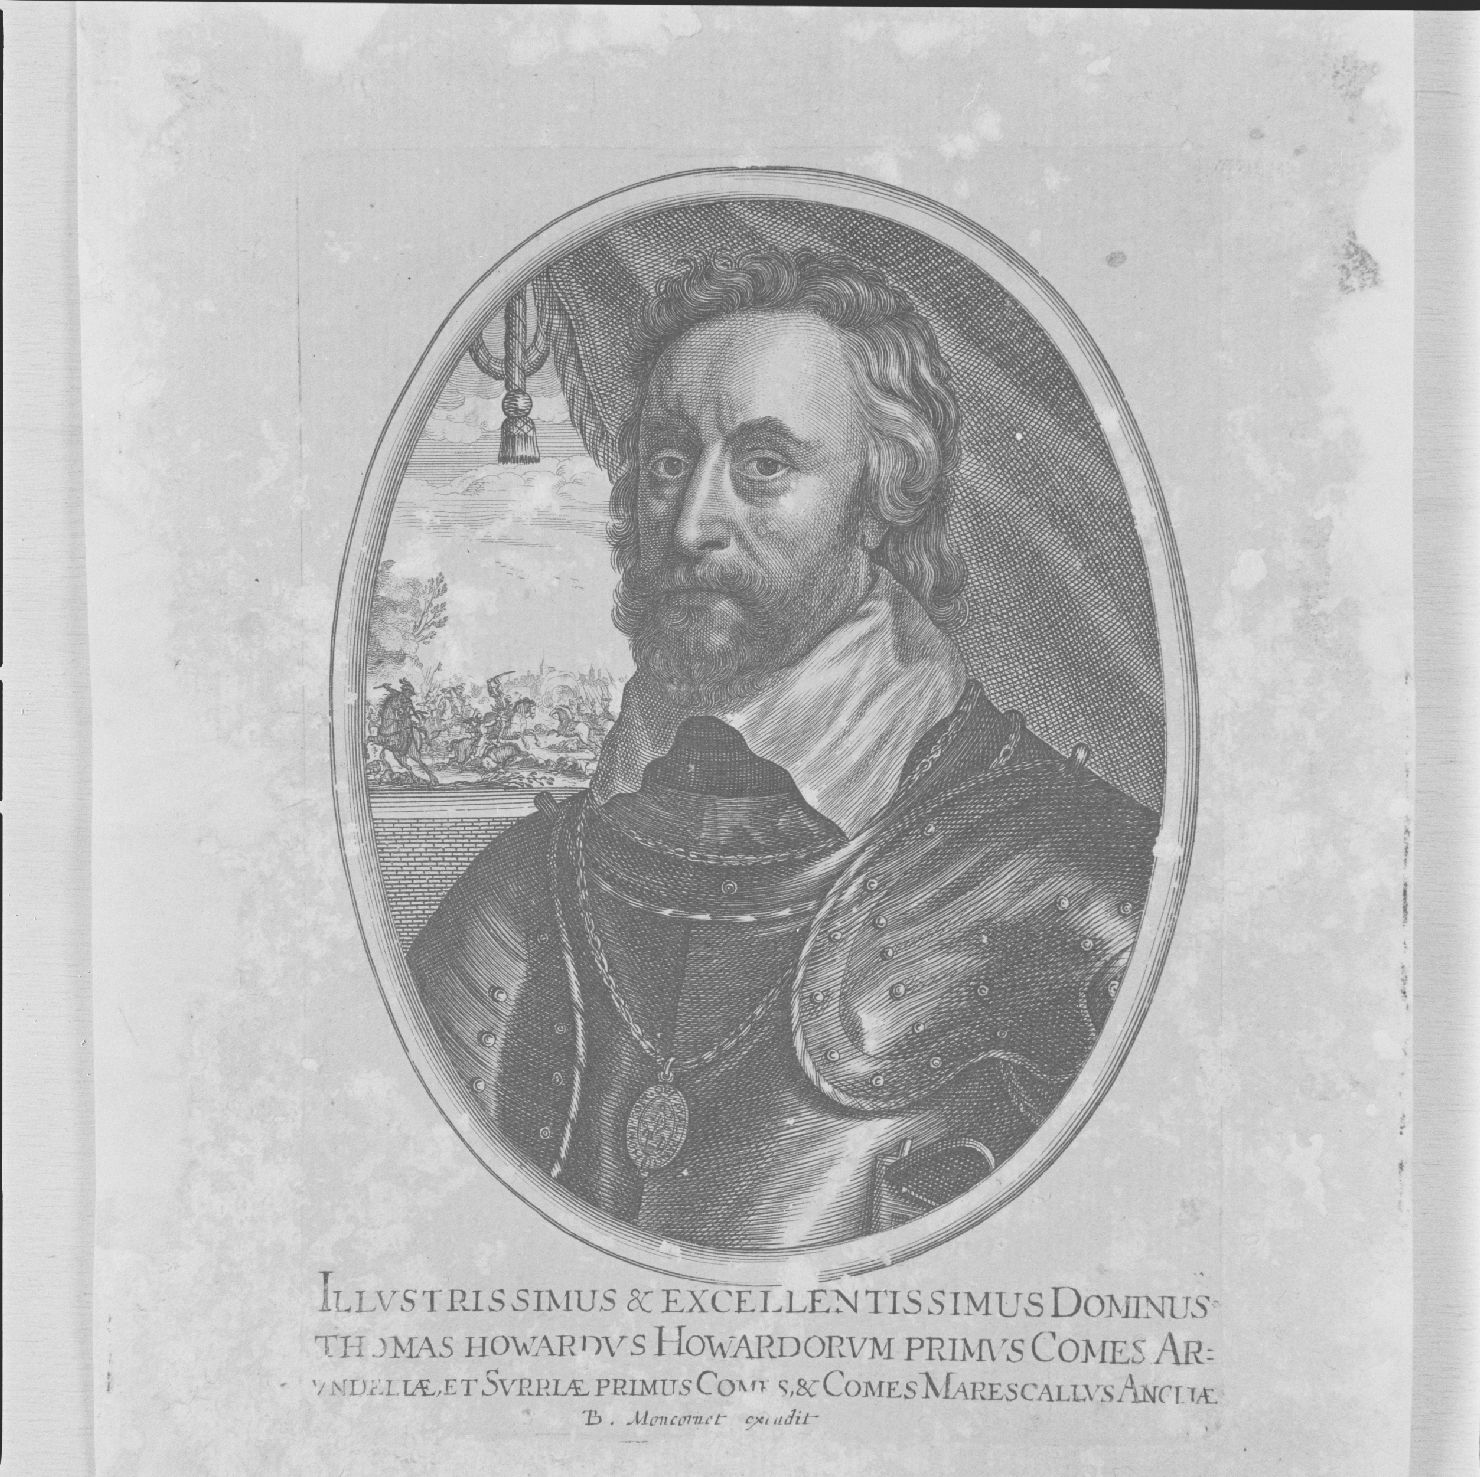 ritratto di Thomas Howard I (stampa smarginata, serie) - ambito francese, ambito francese, ambito francese (sec. XVII)